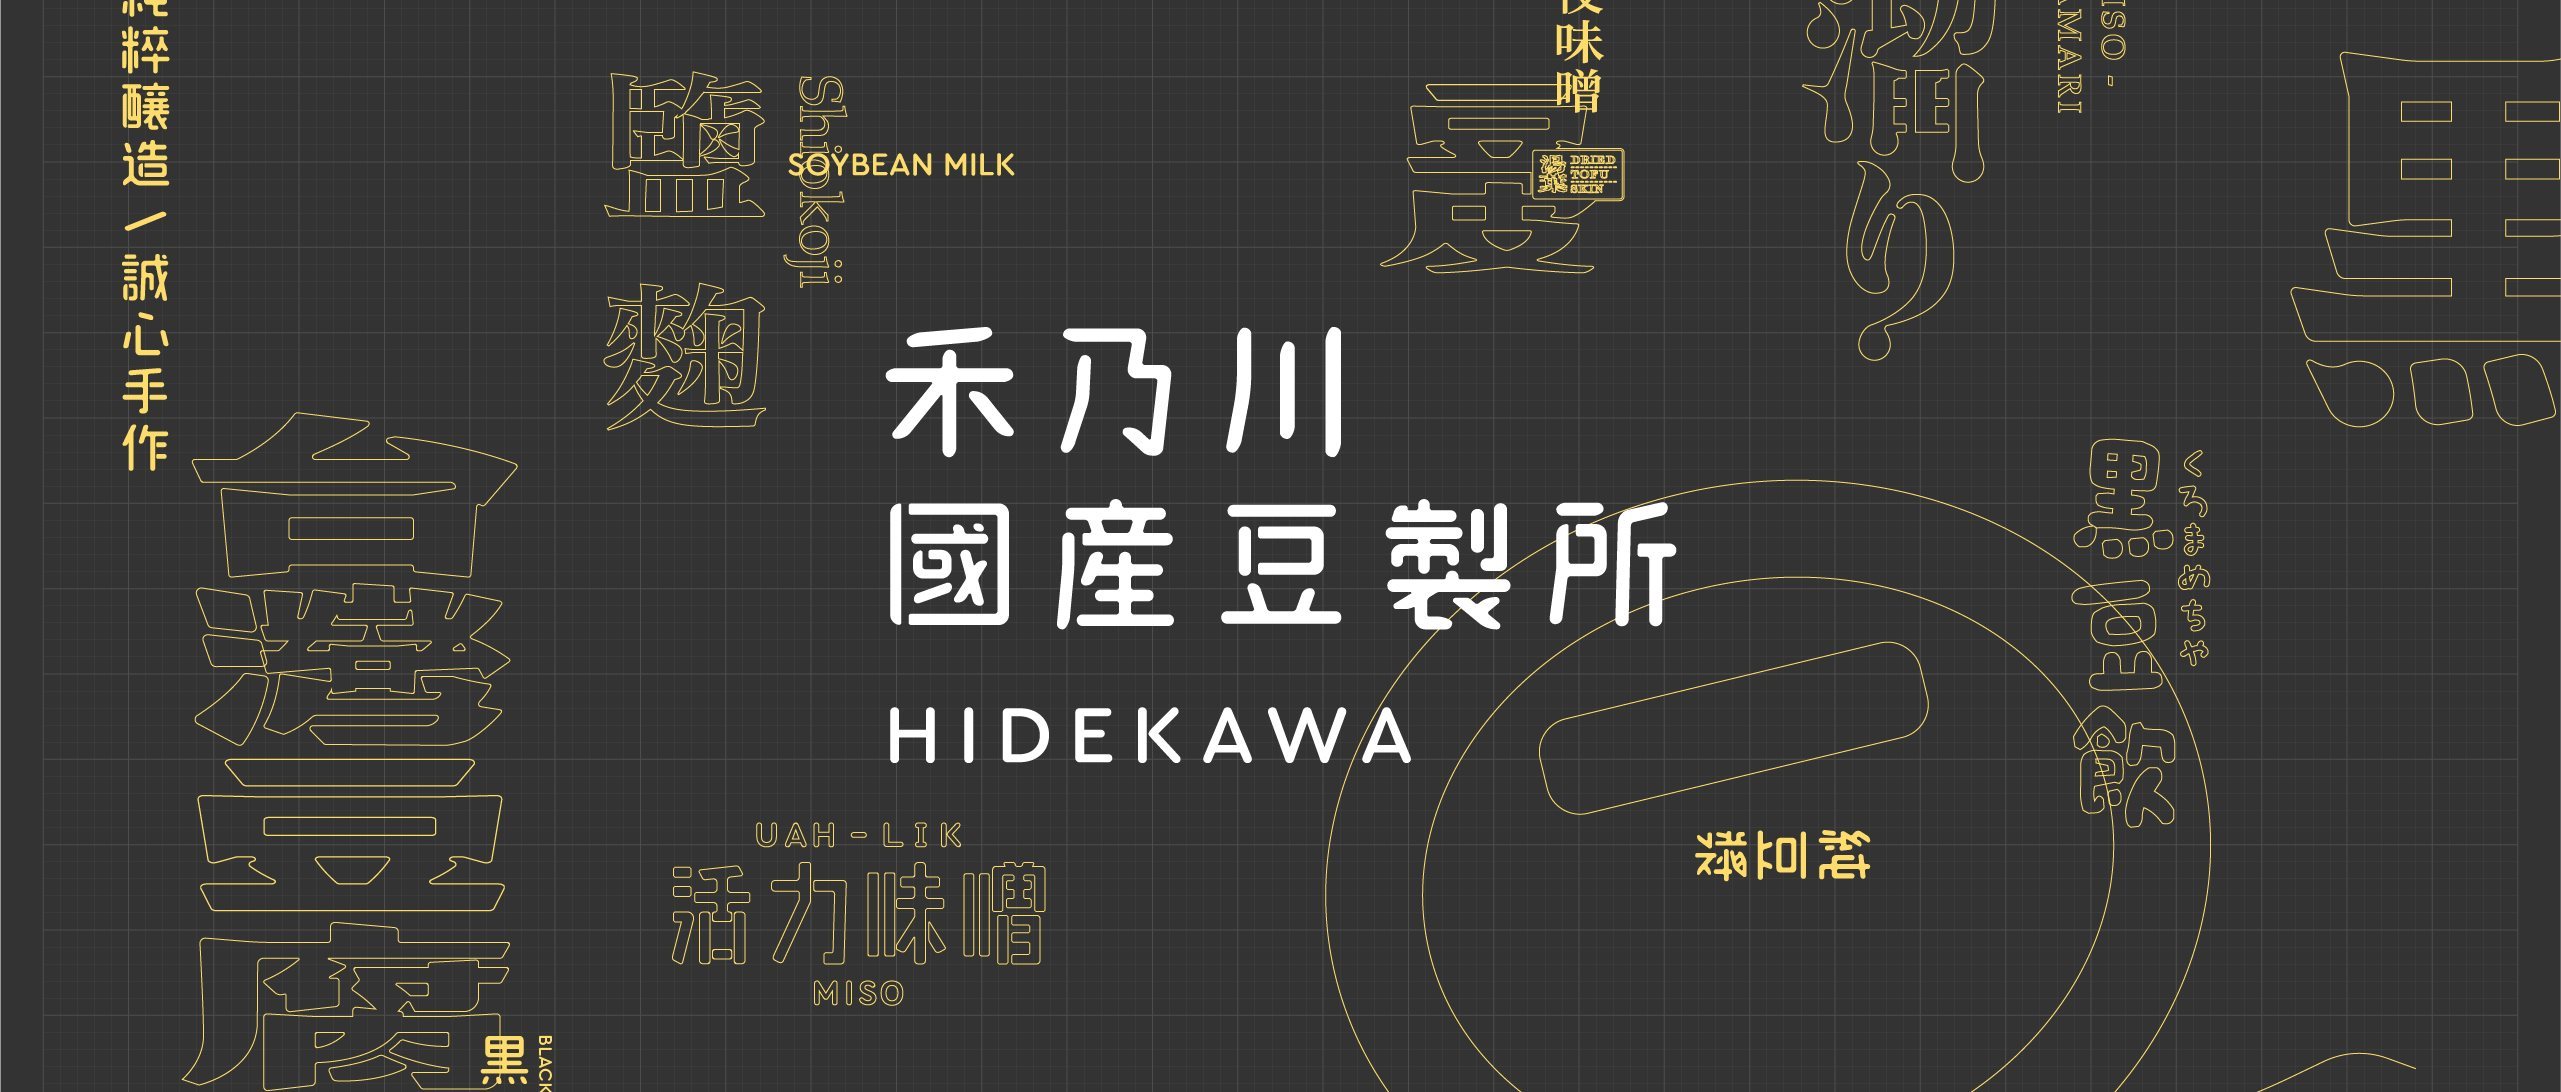 HIDEKAWA Domestic Soybean Products - Taiwan brand design